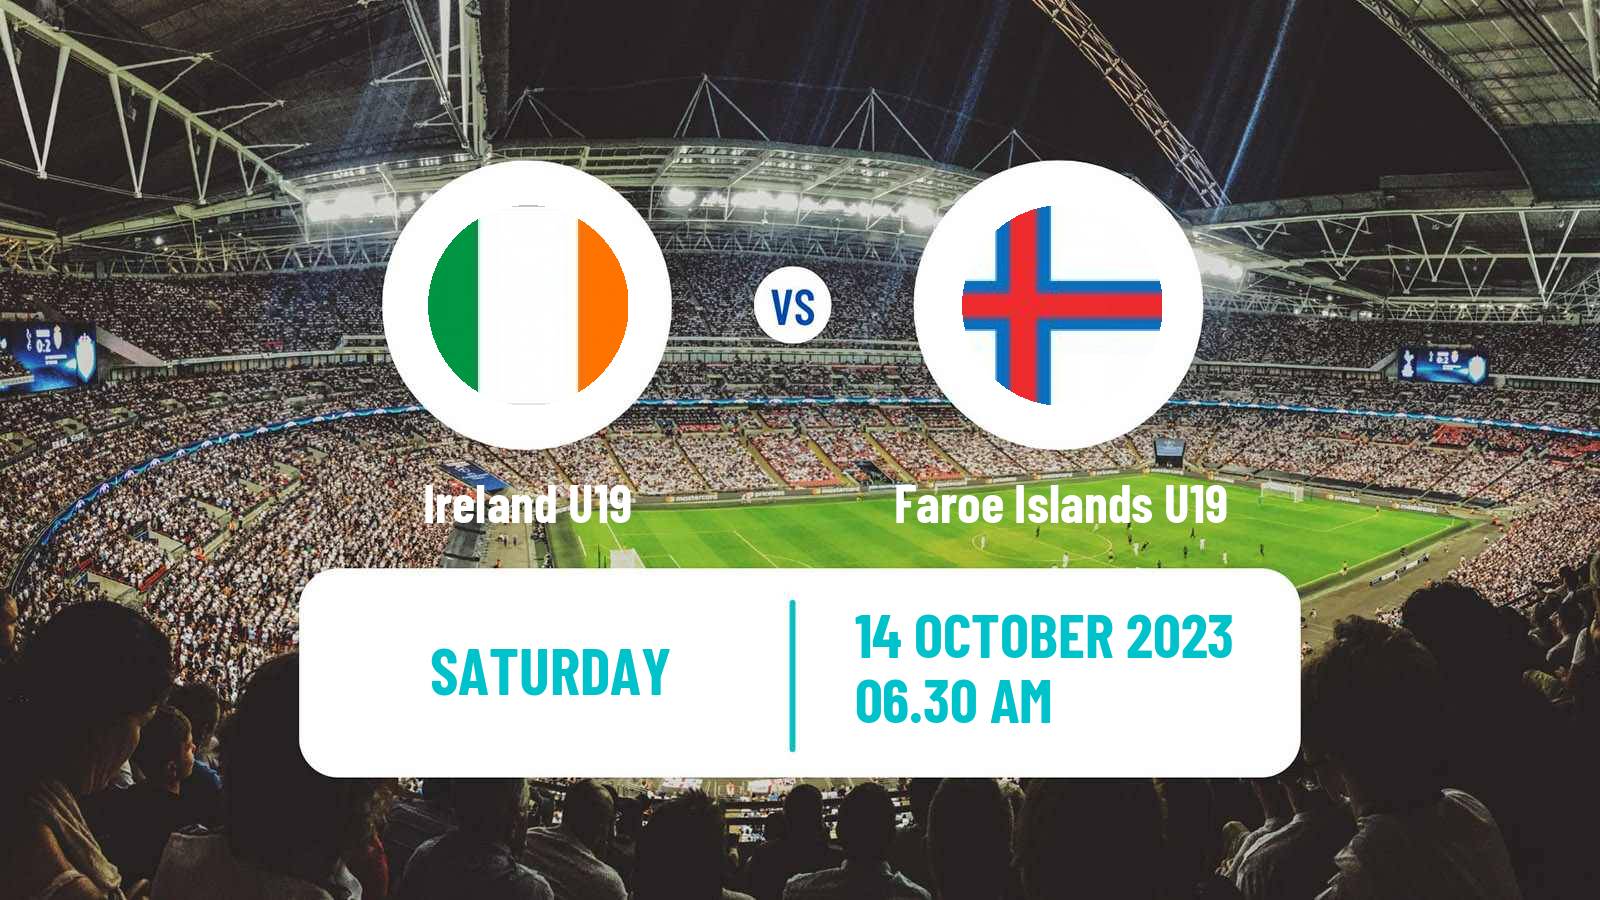 Soccer Friendly Ireland U19 - Faroe Islands U19